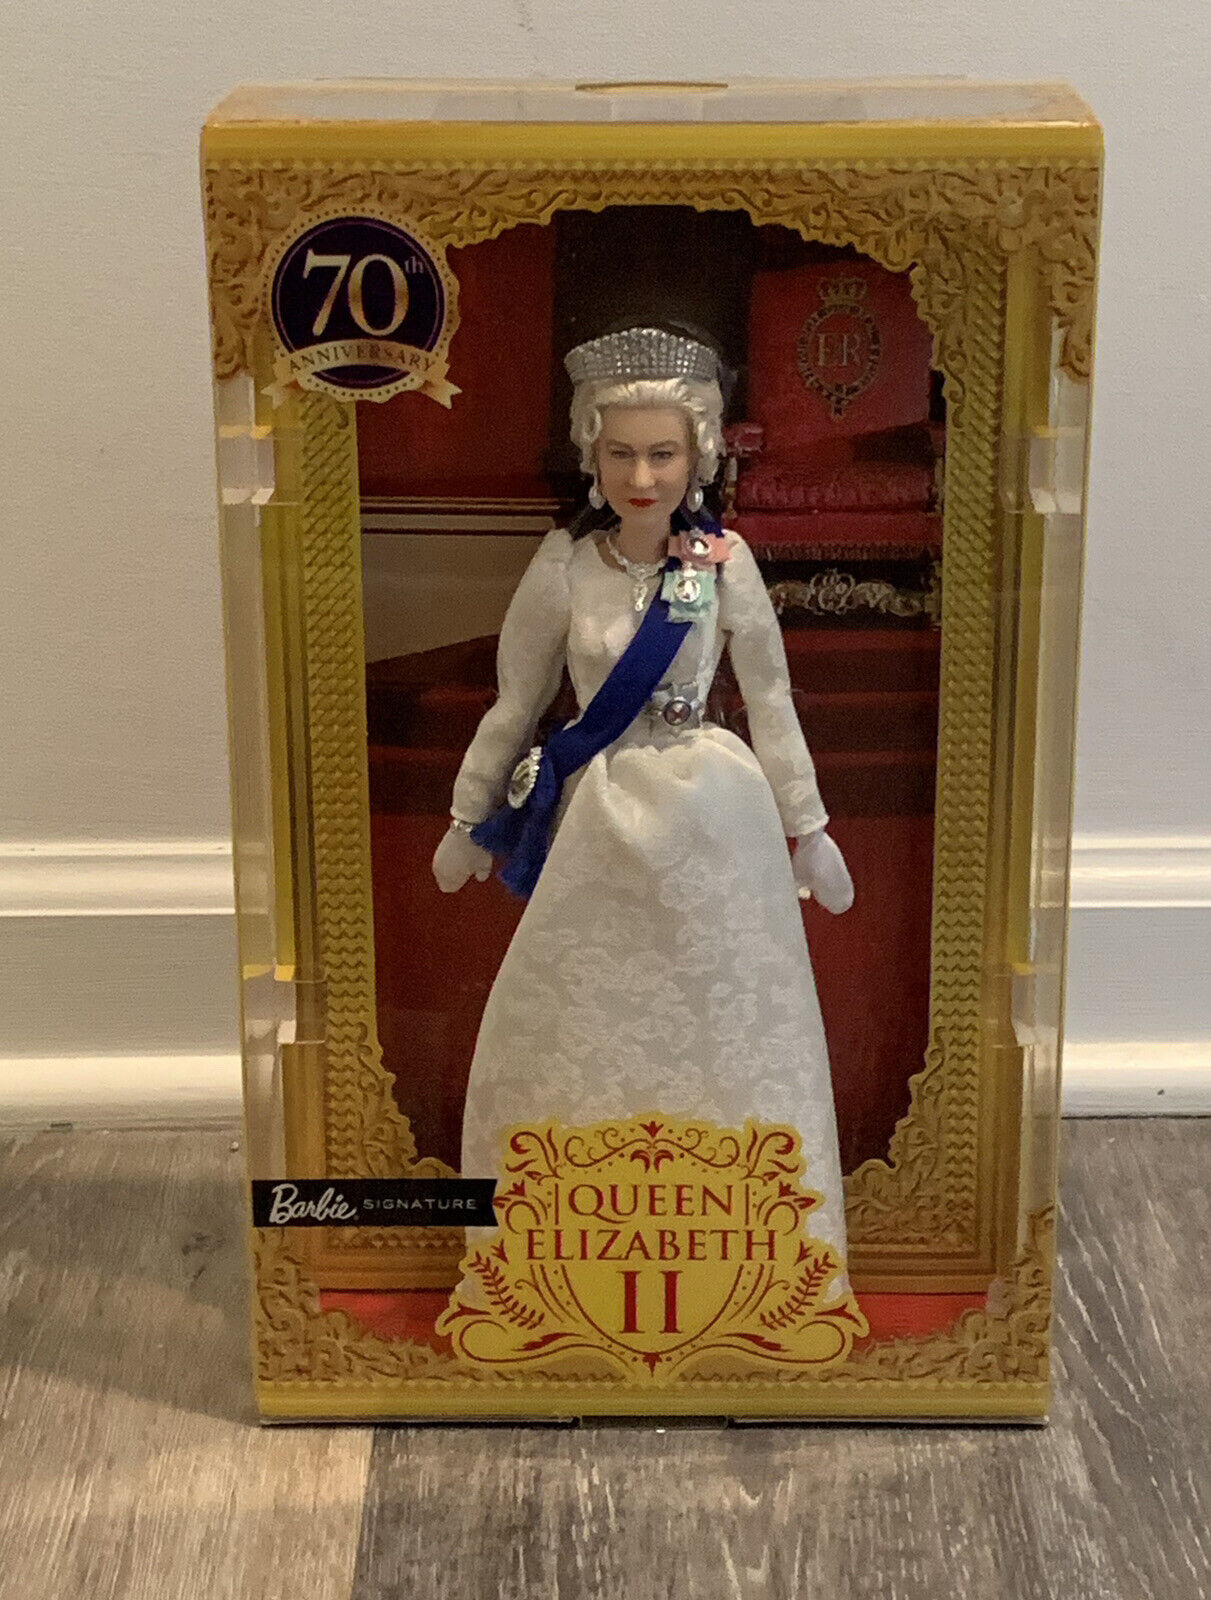 Most Expensive Barbie Signature Queen Elizabeth II Platinum Doll On The Internet